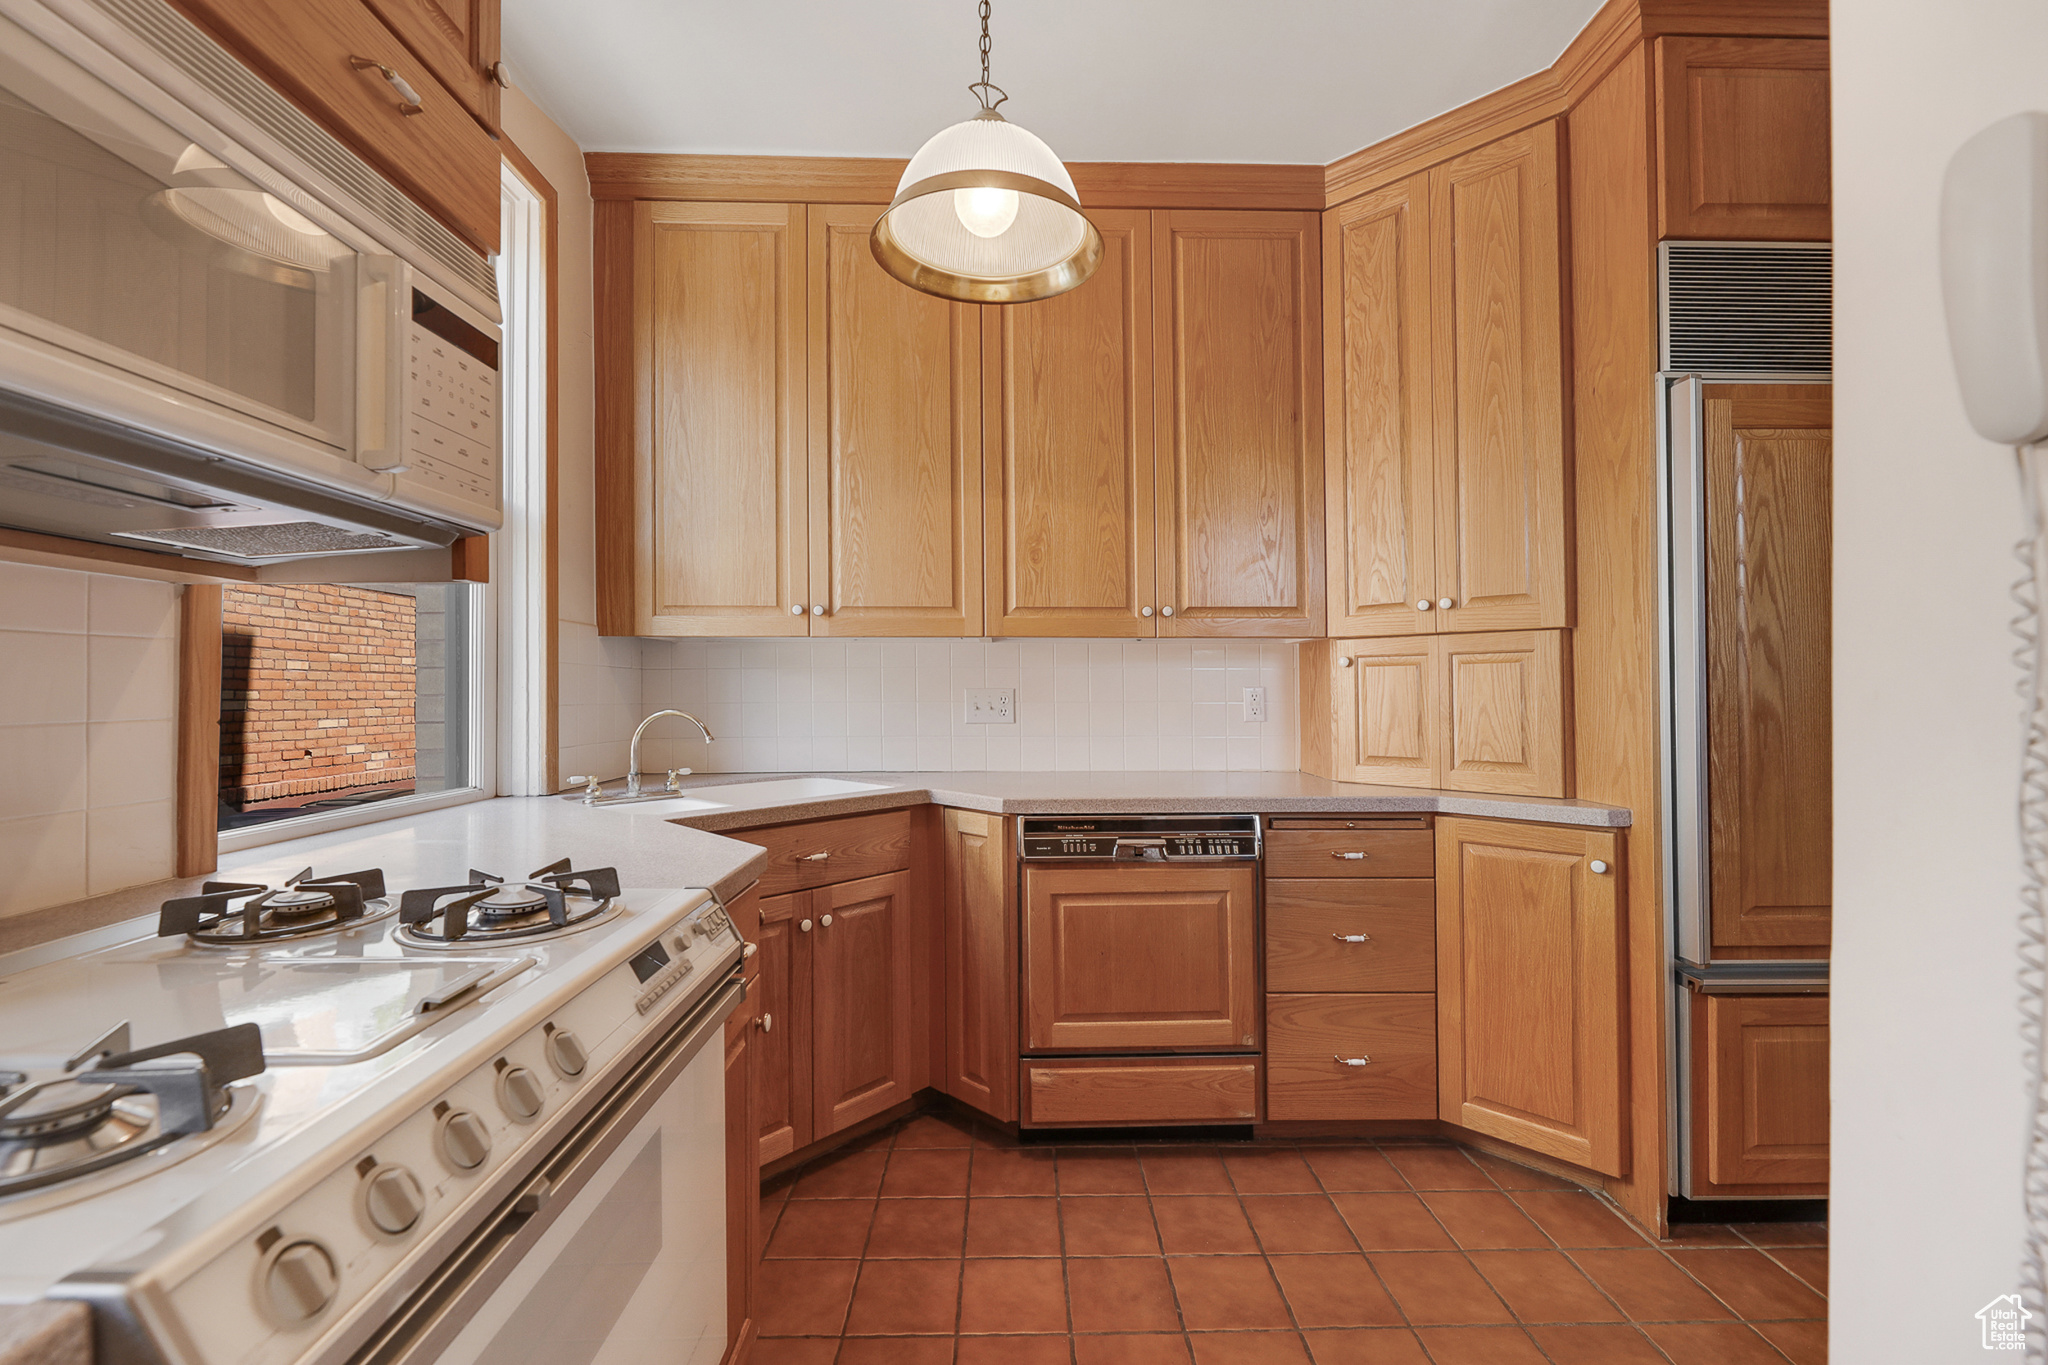 Kitchen with white appliances, tasteful backsplash, dark tile flooring, sink, and pendant lighting